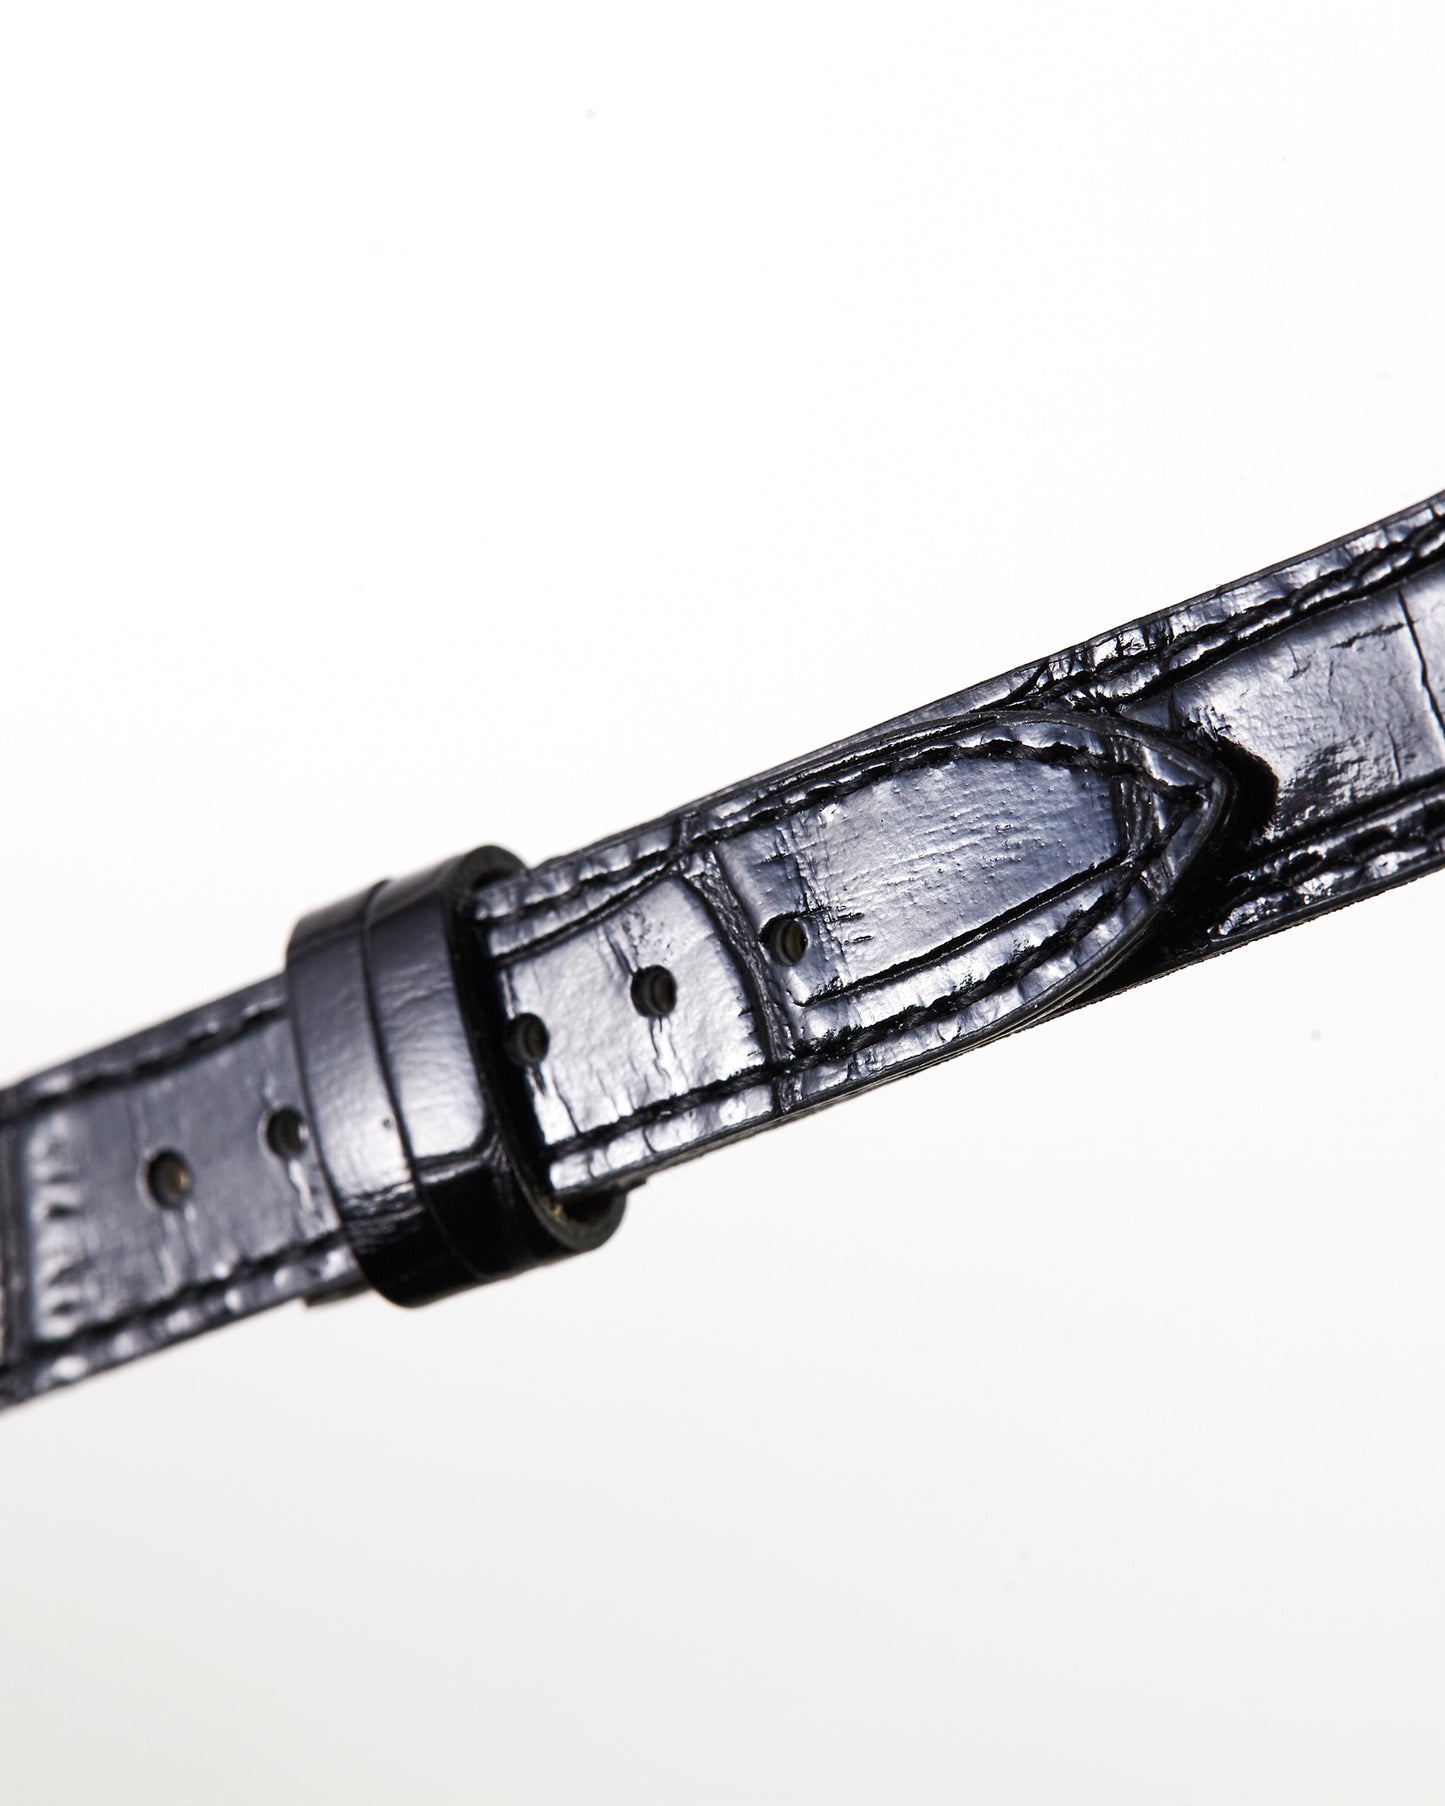 Ecclissi 22350 Black Alligator Grain Leather Strap 14mm x 12mm with screw holes